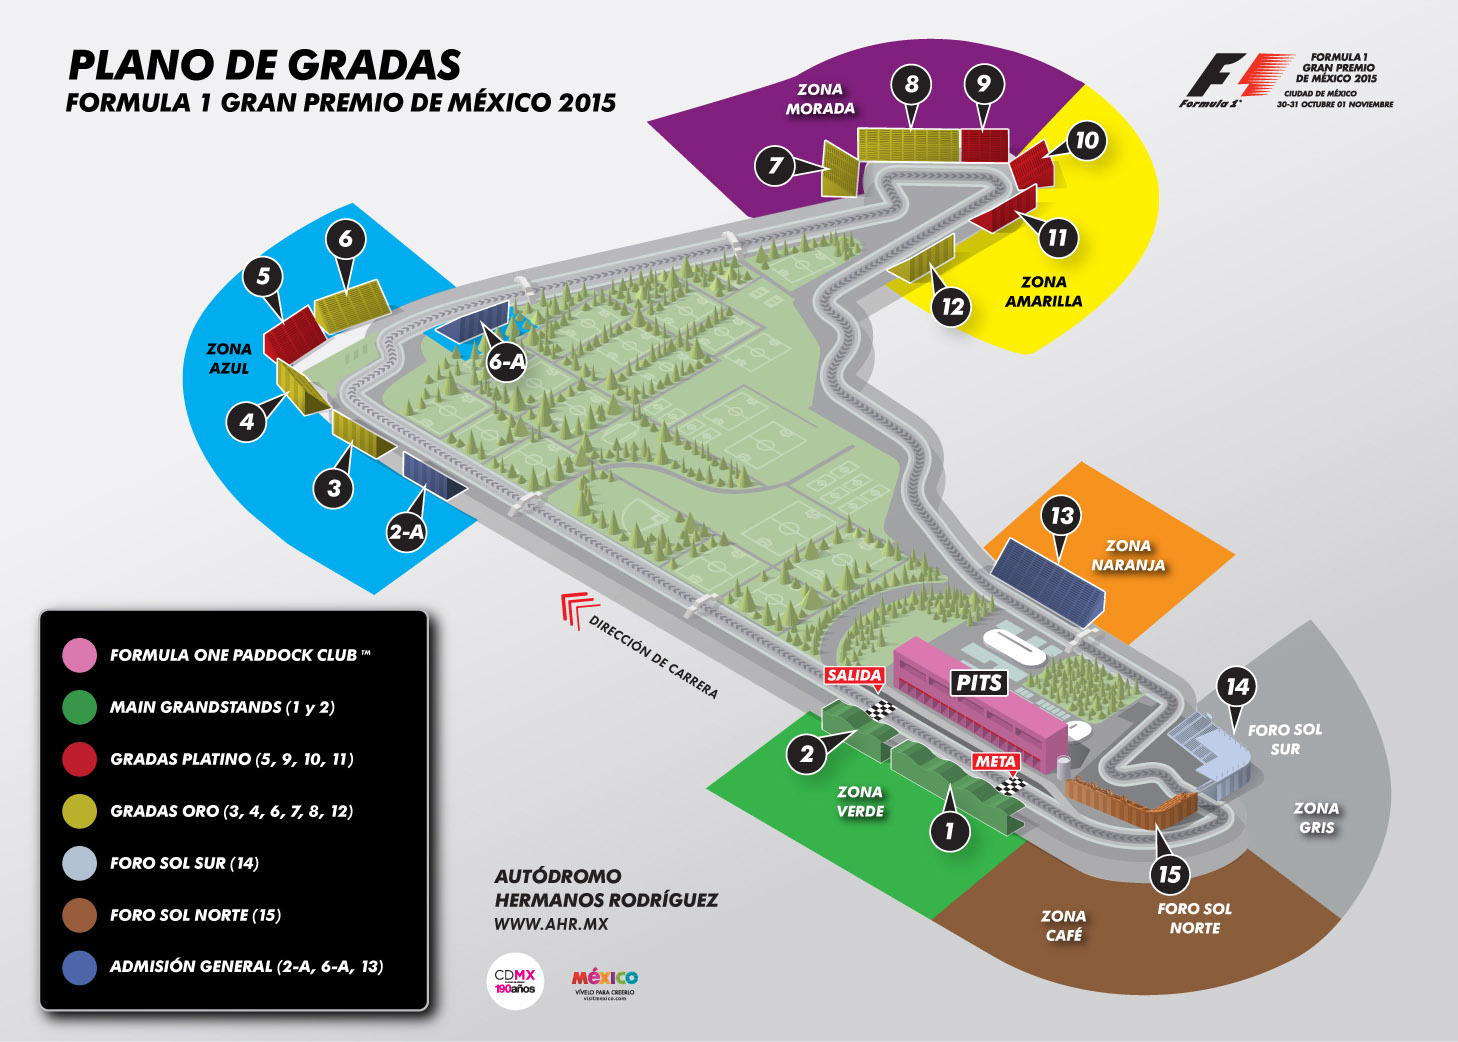 Mapa de zonas dentro de Autódromo Hermanos Rodriguez. 